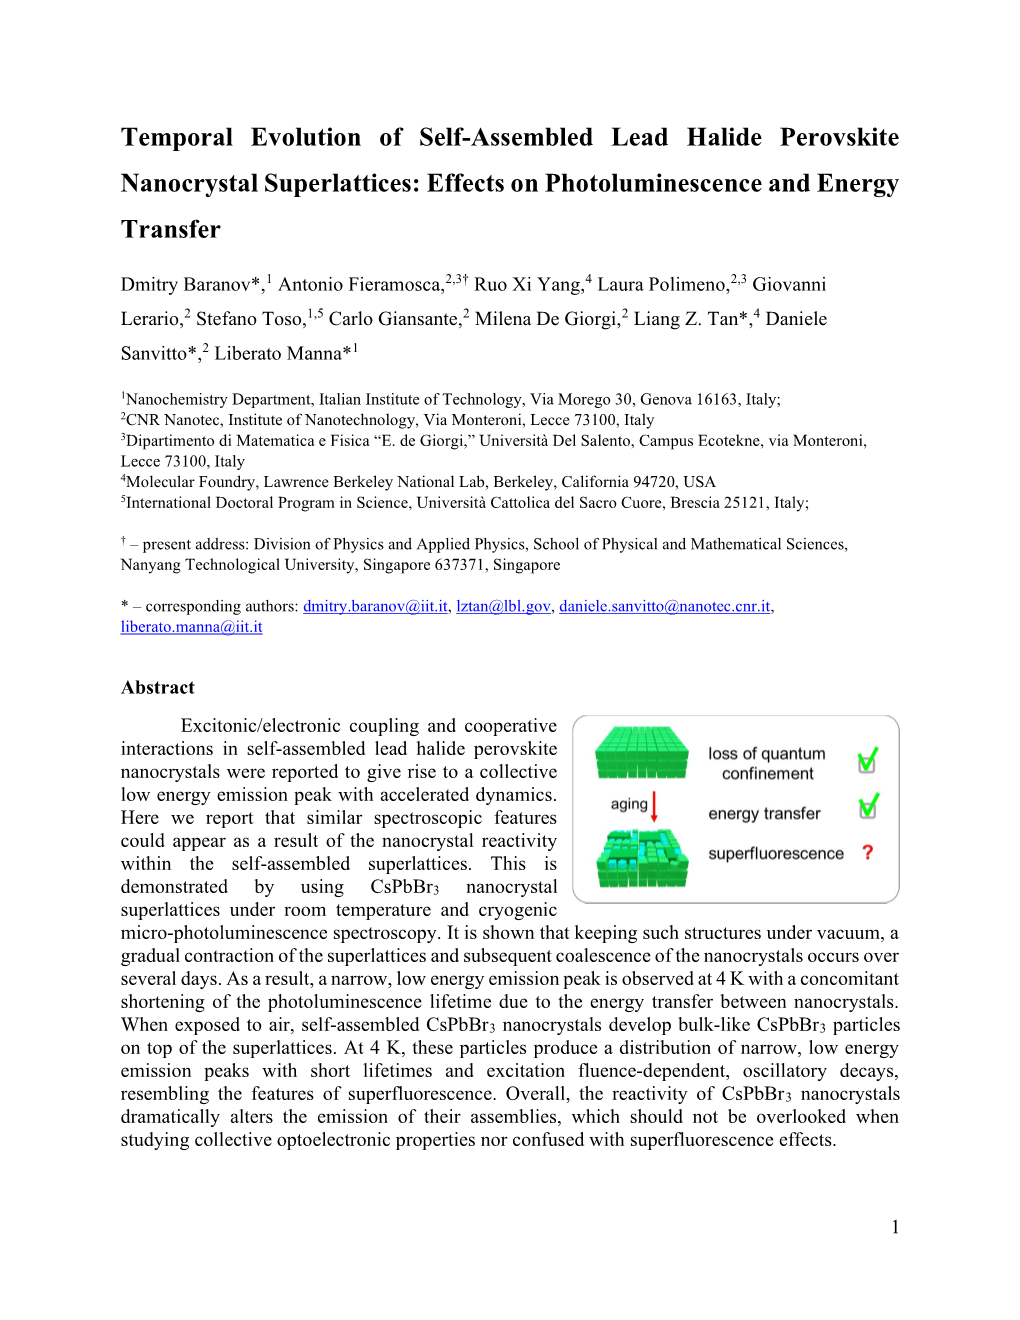 Temporal Evolution of Self-Assembled Lead Halide Perovskite Nanocrystal Superlattices: Effects on Photoluminescence and Energy Transfer